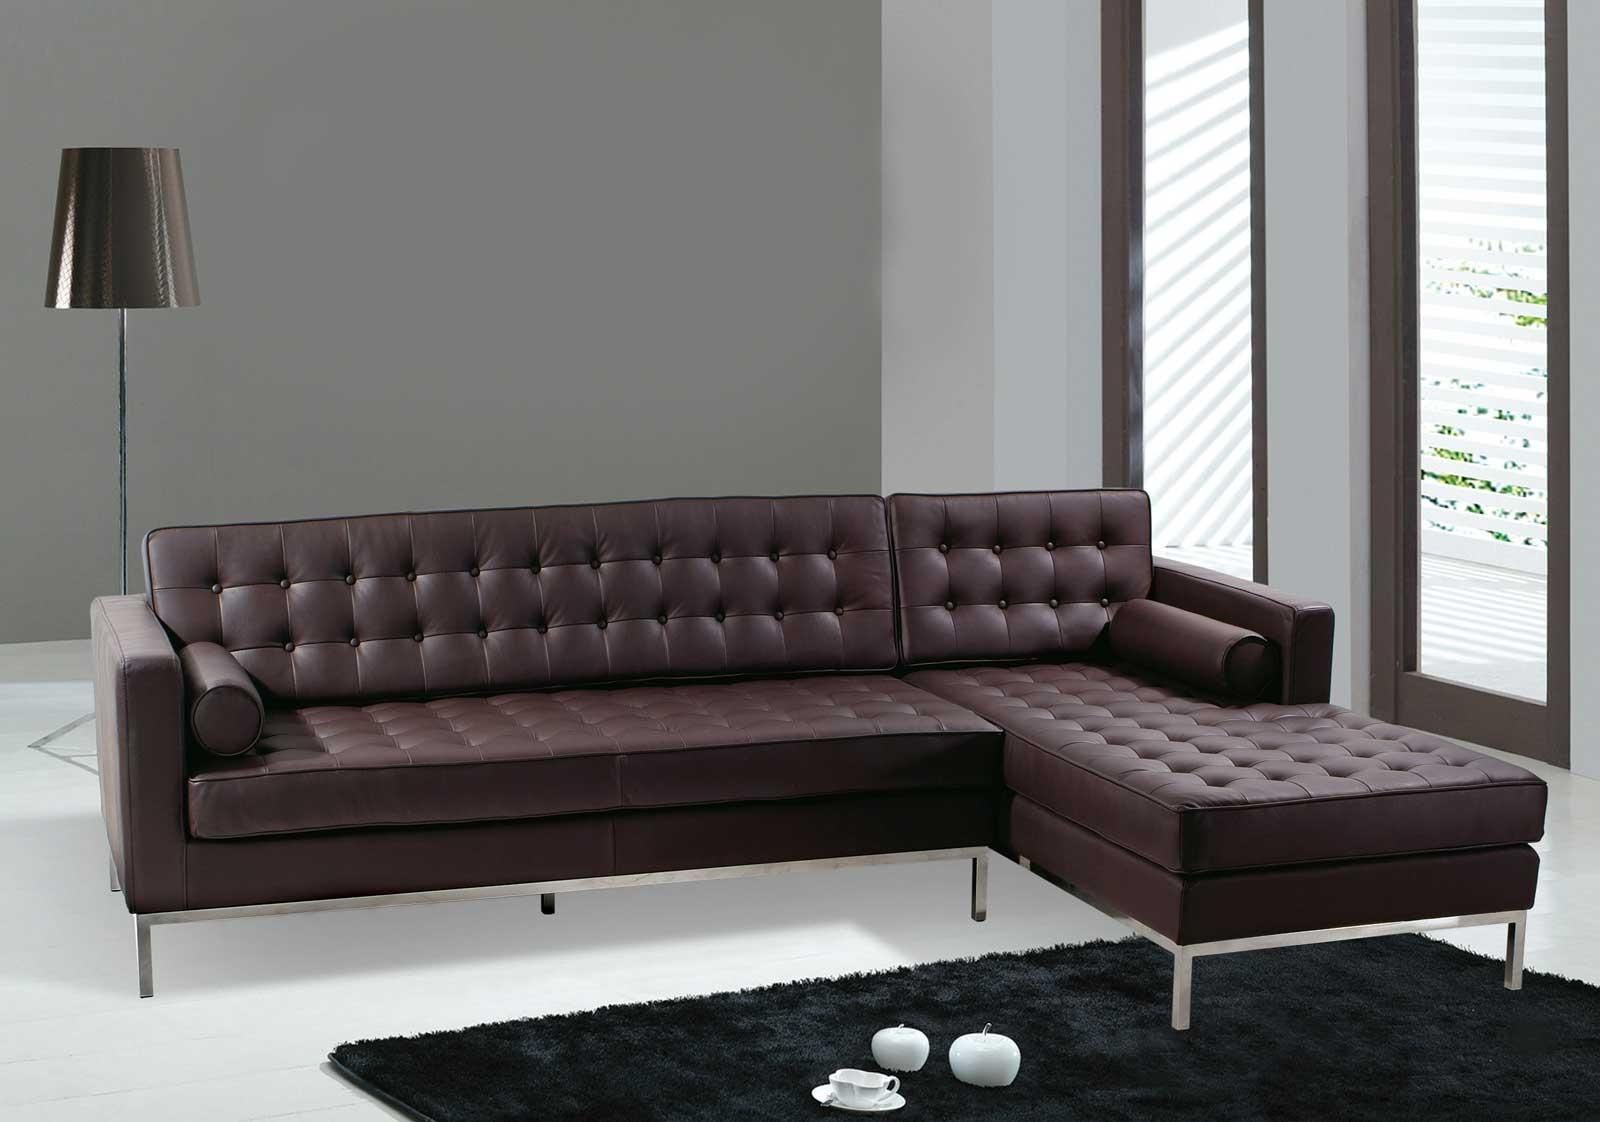 Contemporary Leather Sectional Sofas Regarding Leather Modern Sectional Sofas (View 7 of 20)